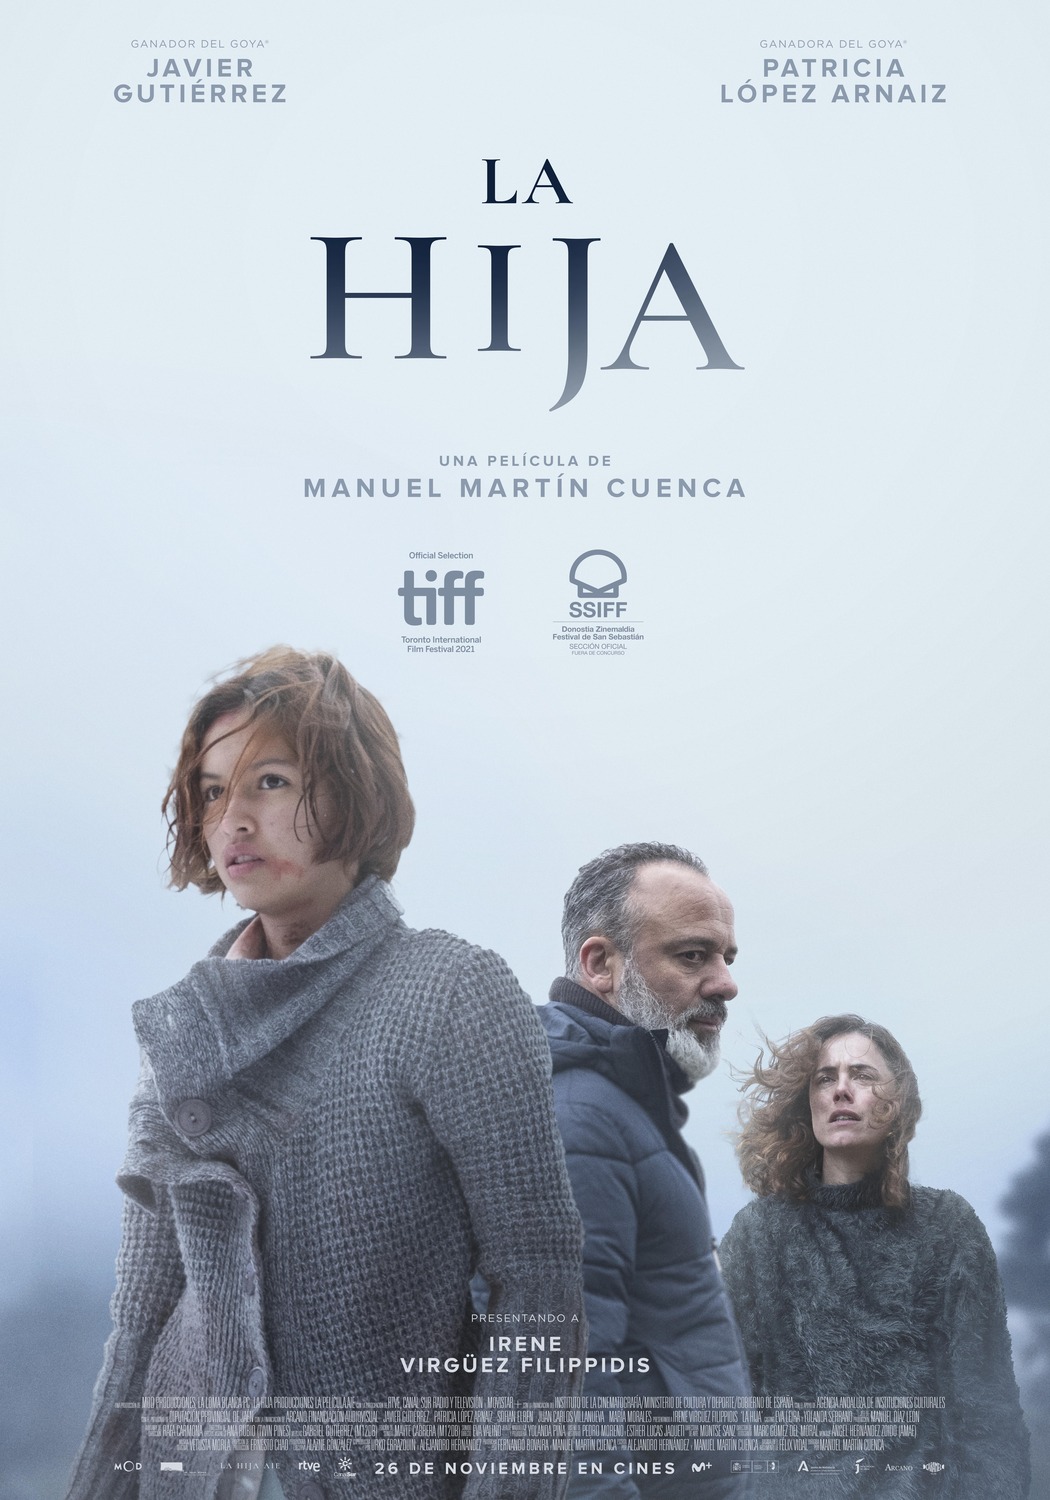 Extra Large Movie Poster Image for La hija 